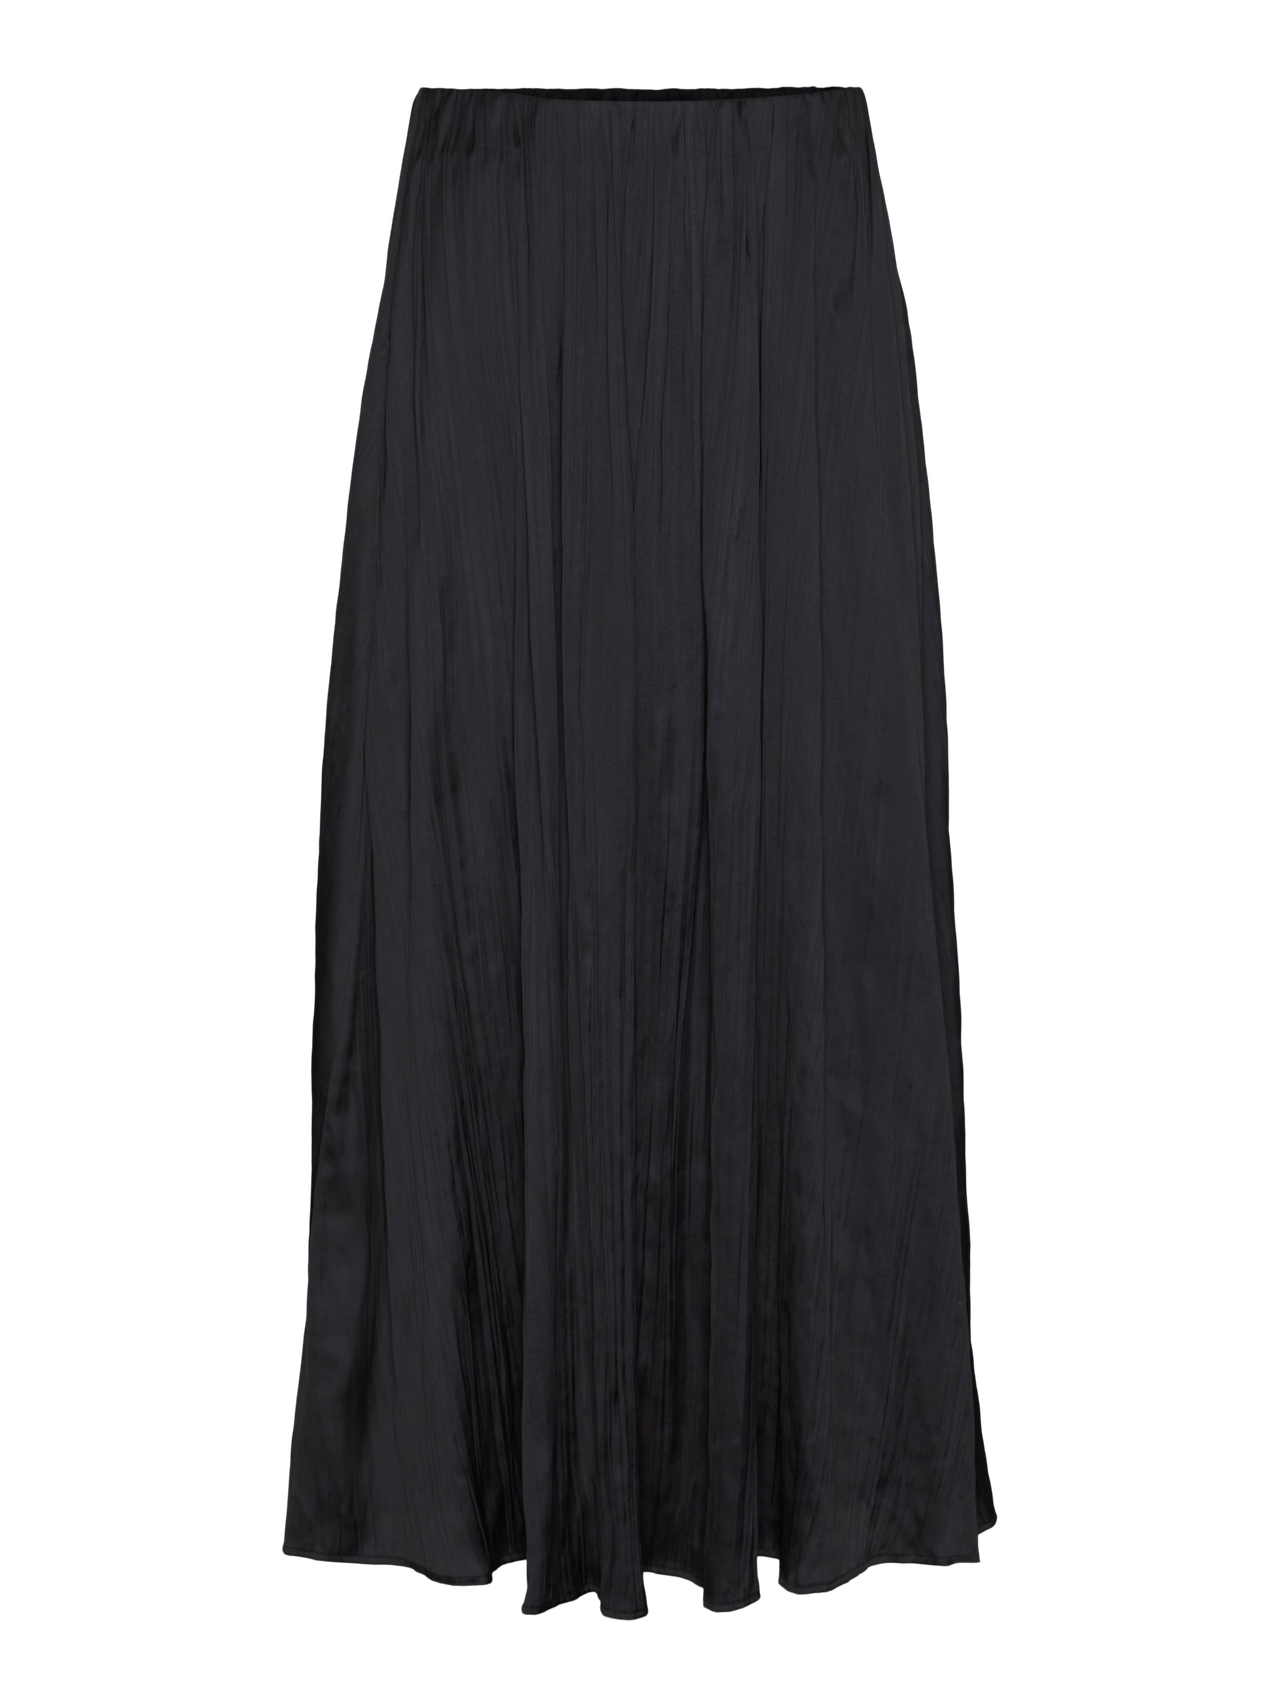 Vero Moda VMBETTI Long skirt -Black - 10314926